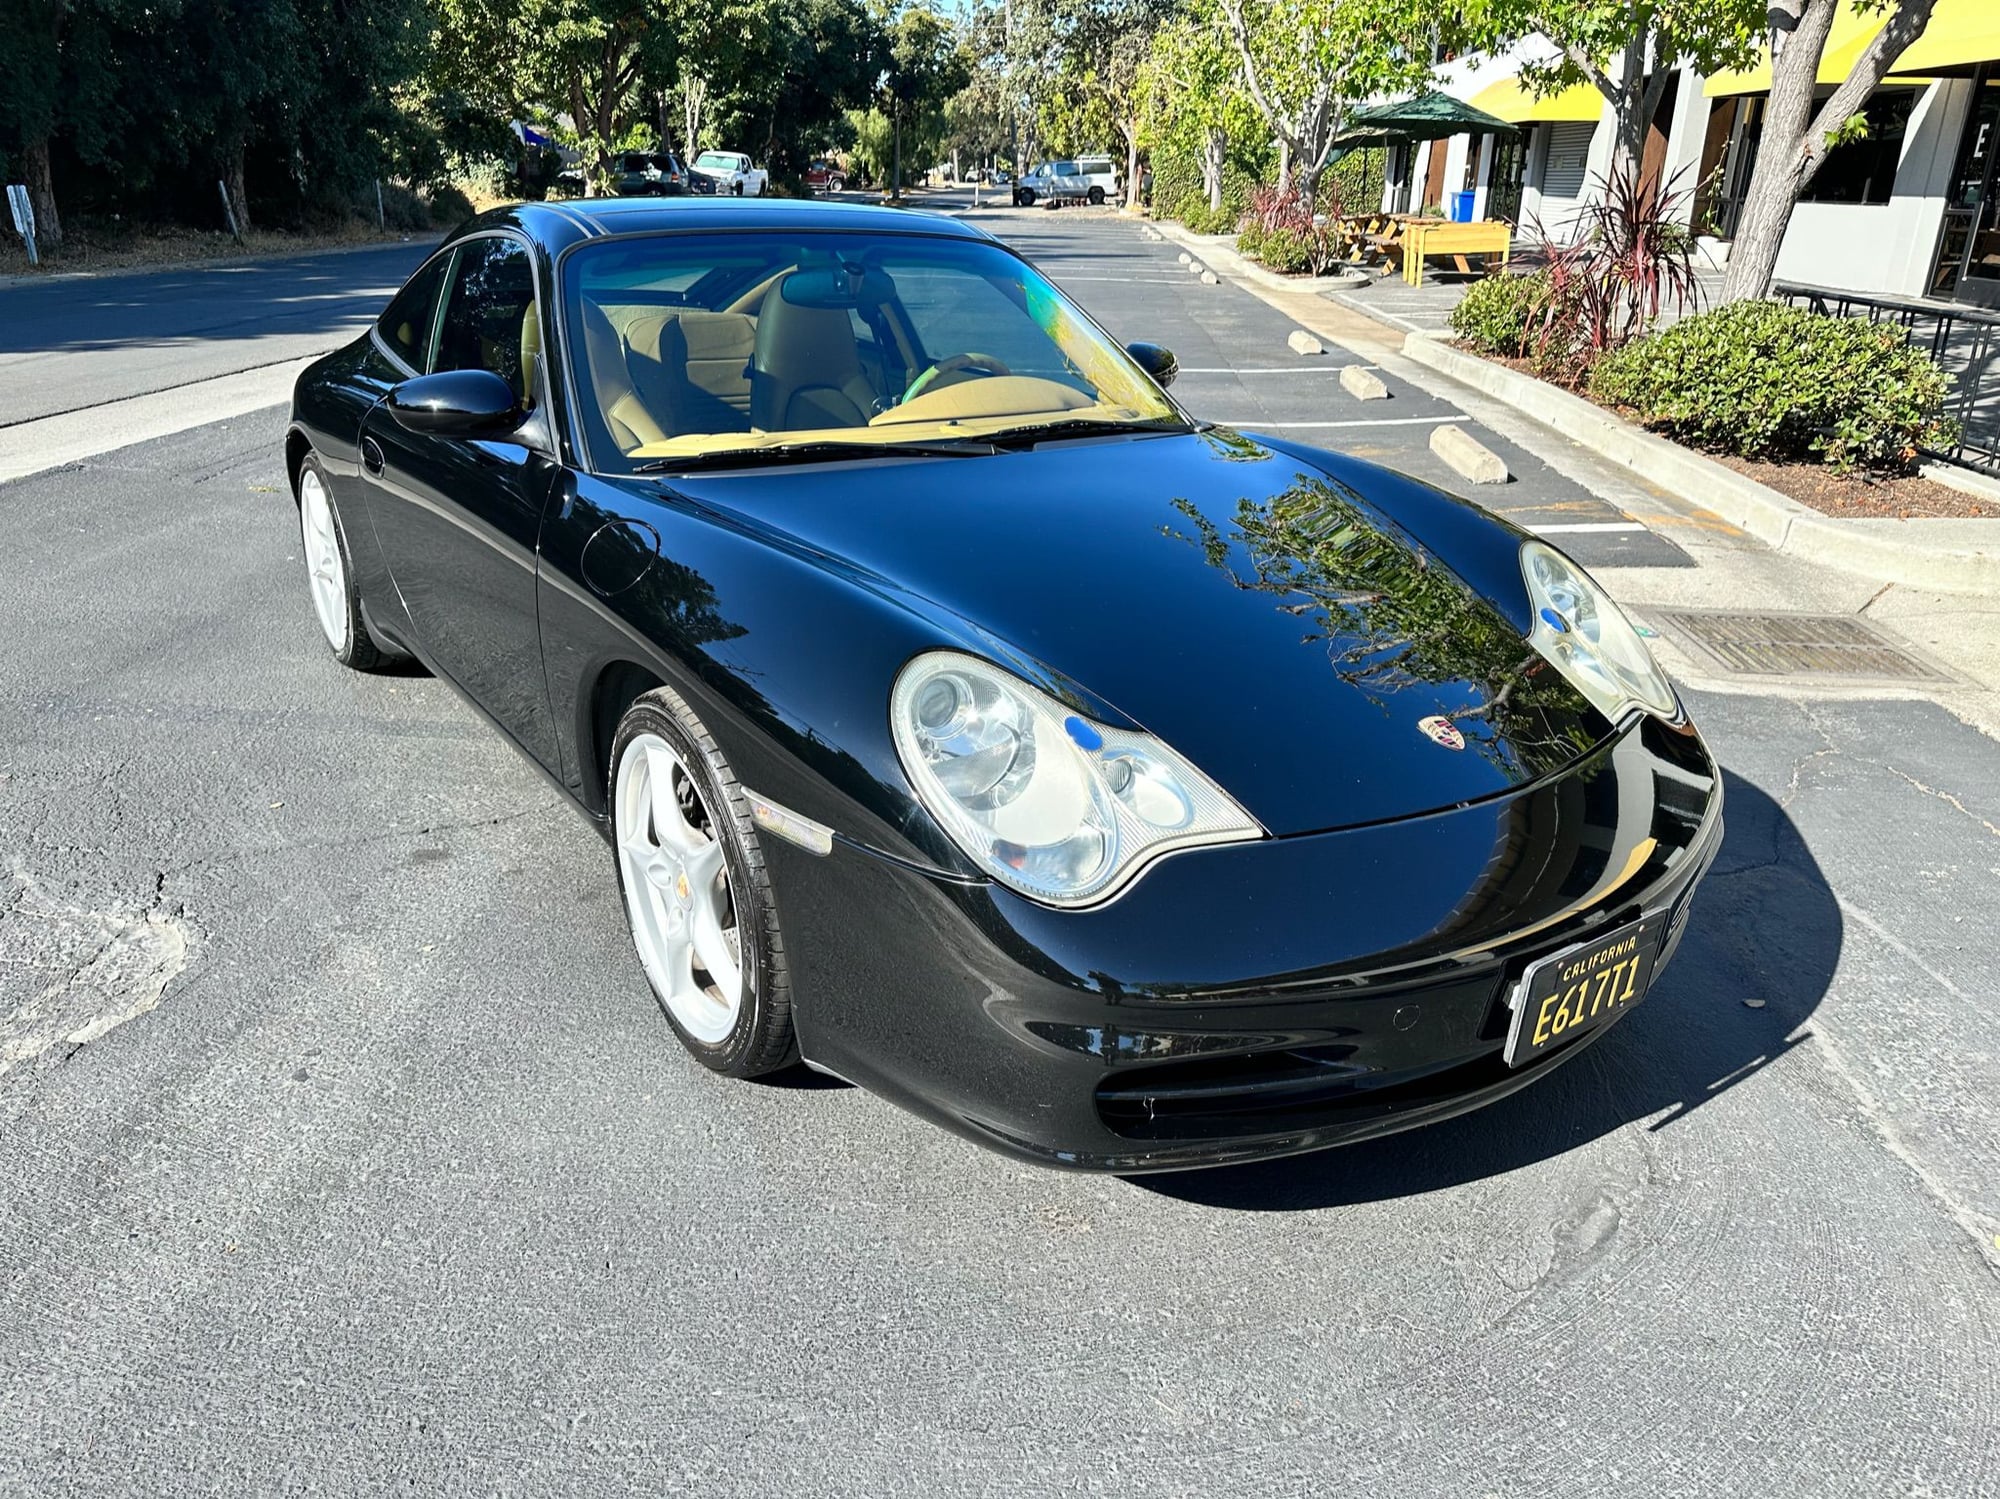 2002 Porsche 911 - 2002 996 Targa Black on Tan 73,000 miles - Used - Menlo Park, CA 94025, United States